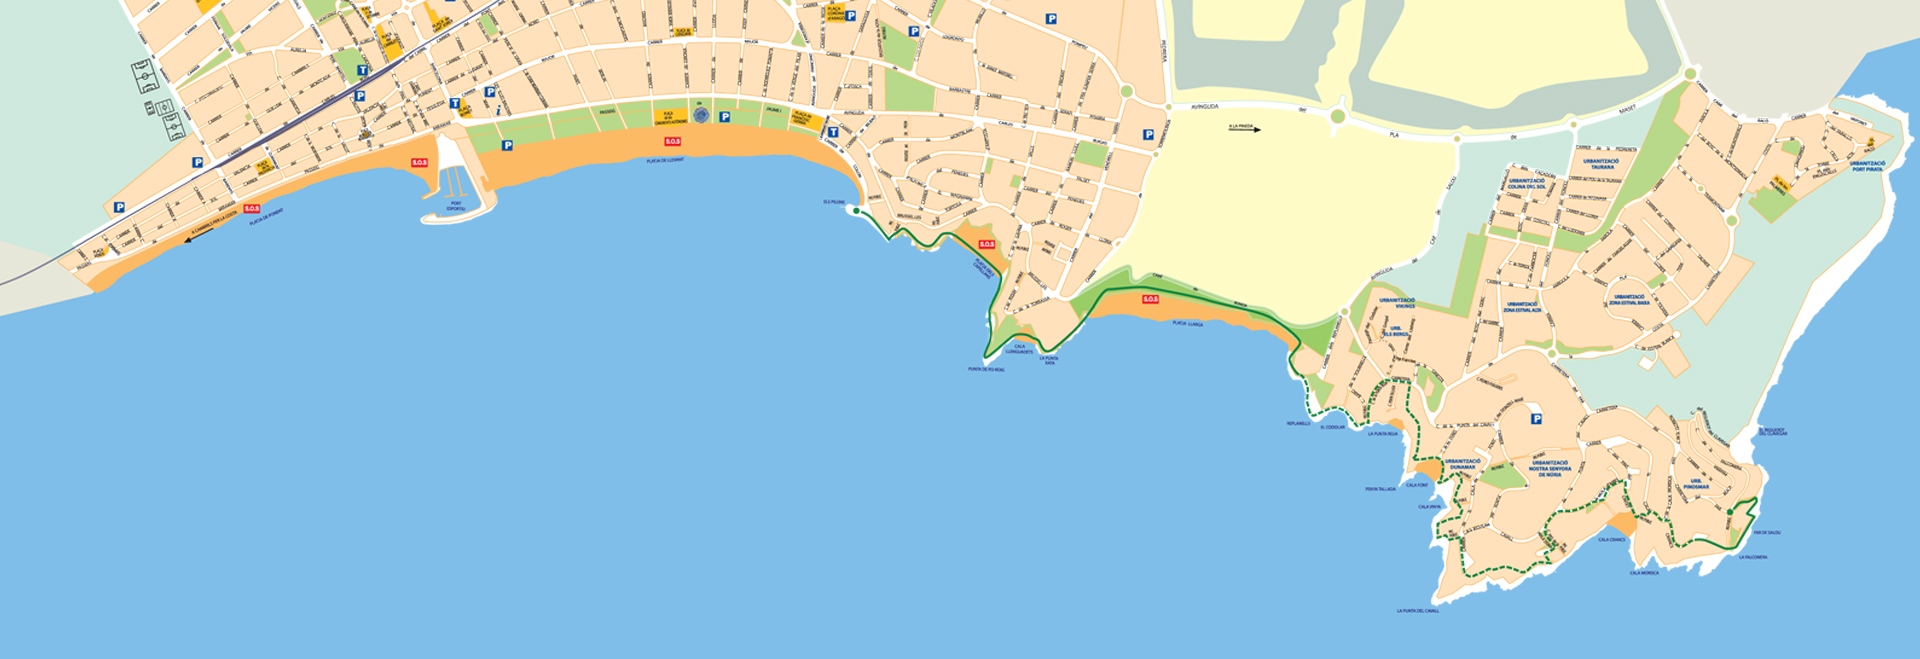 Beaches map